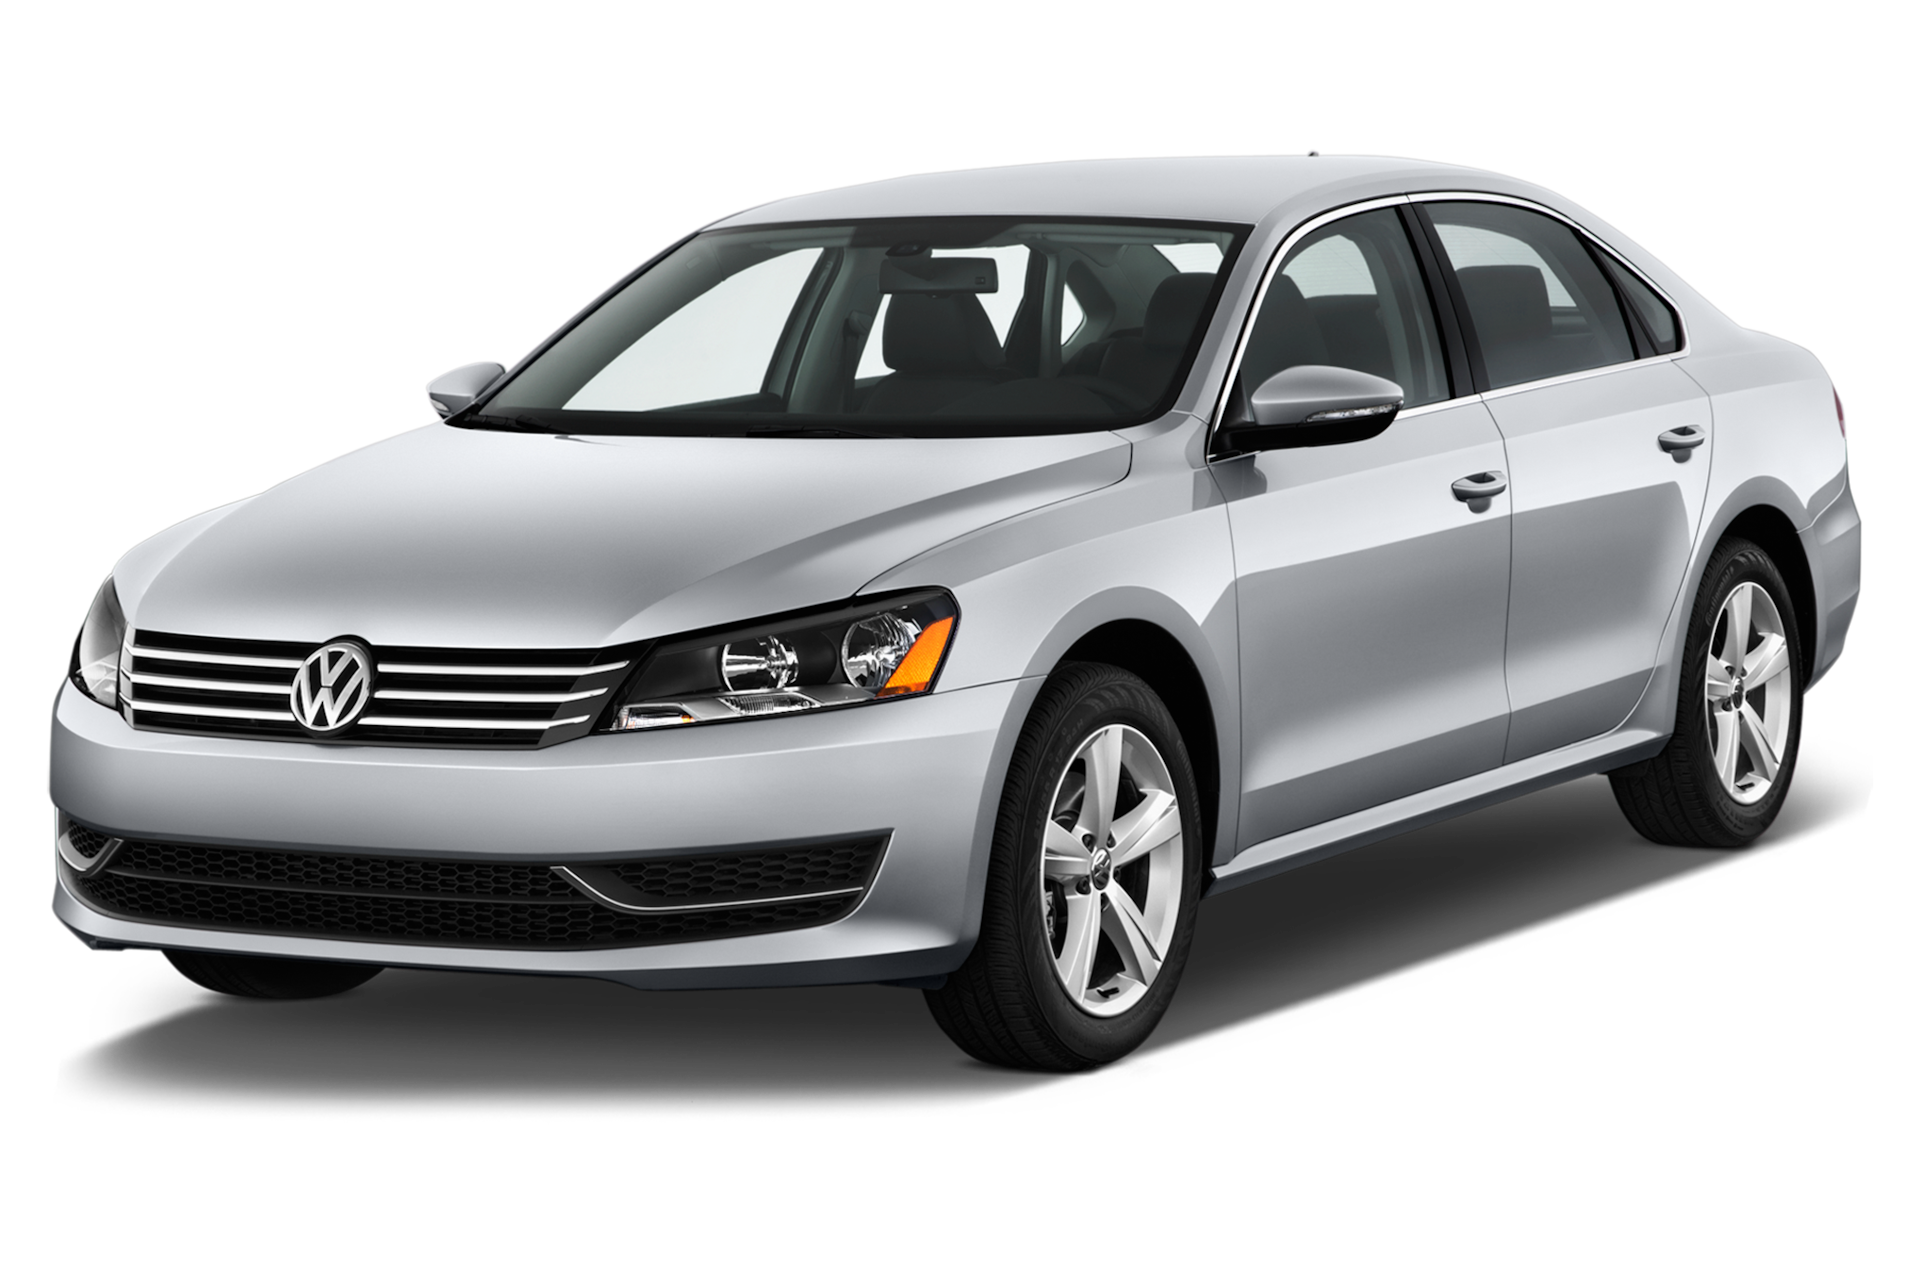 2012 Volkswagen Passat Prices, Reviews, and Photos - MotorTrend